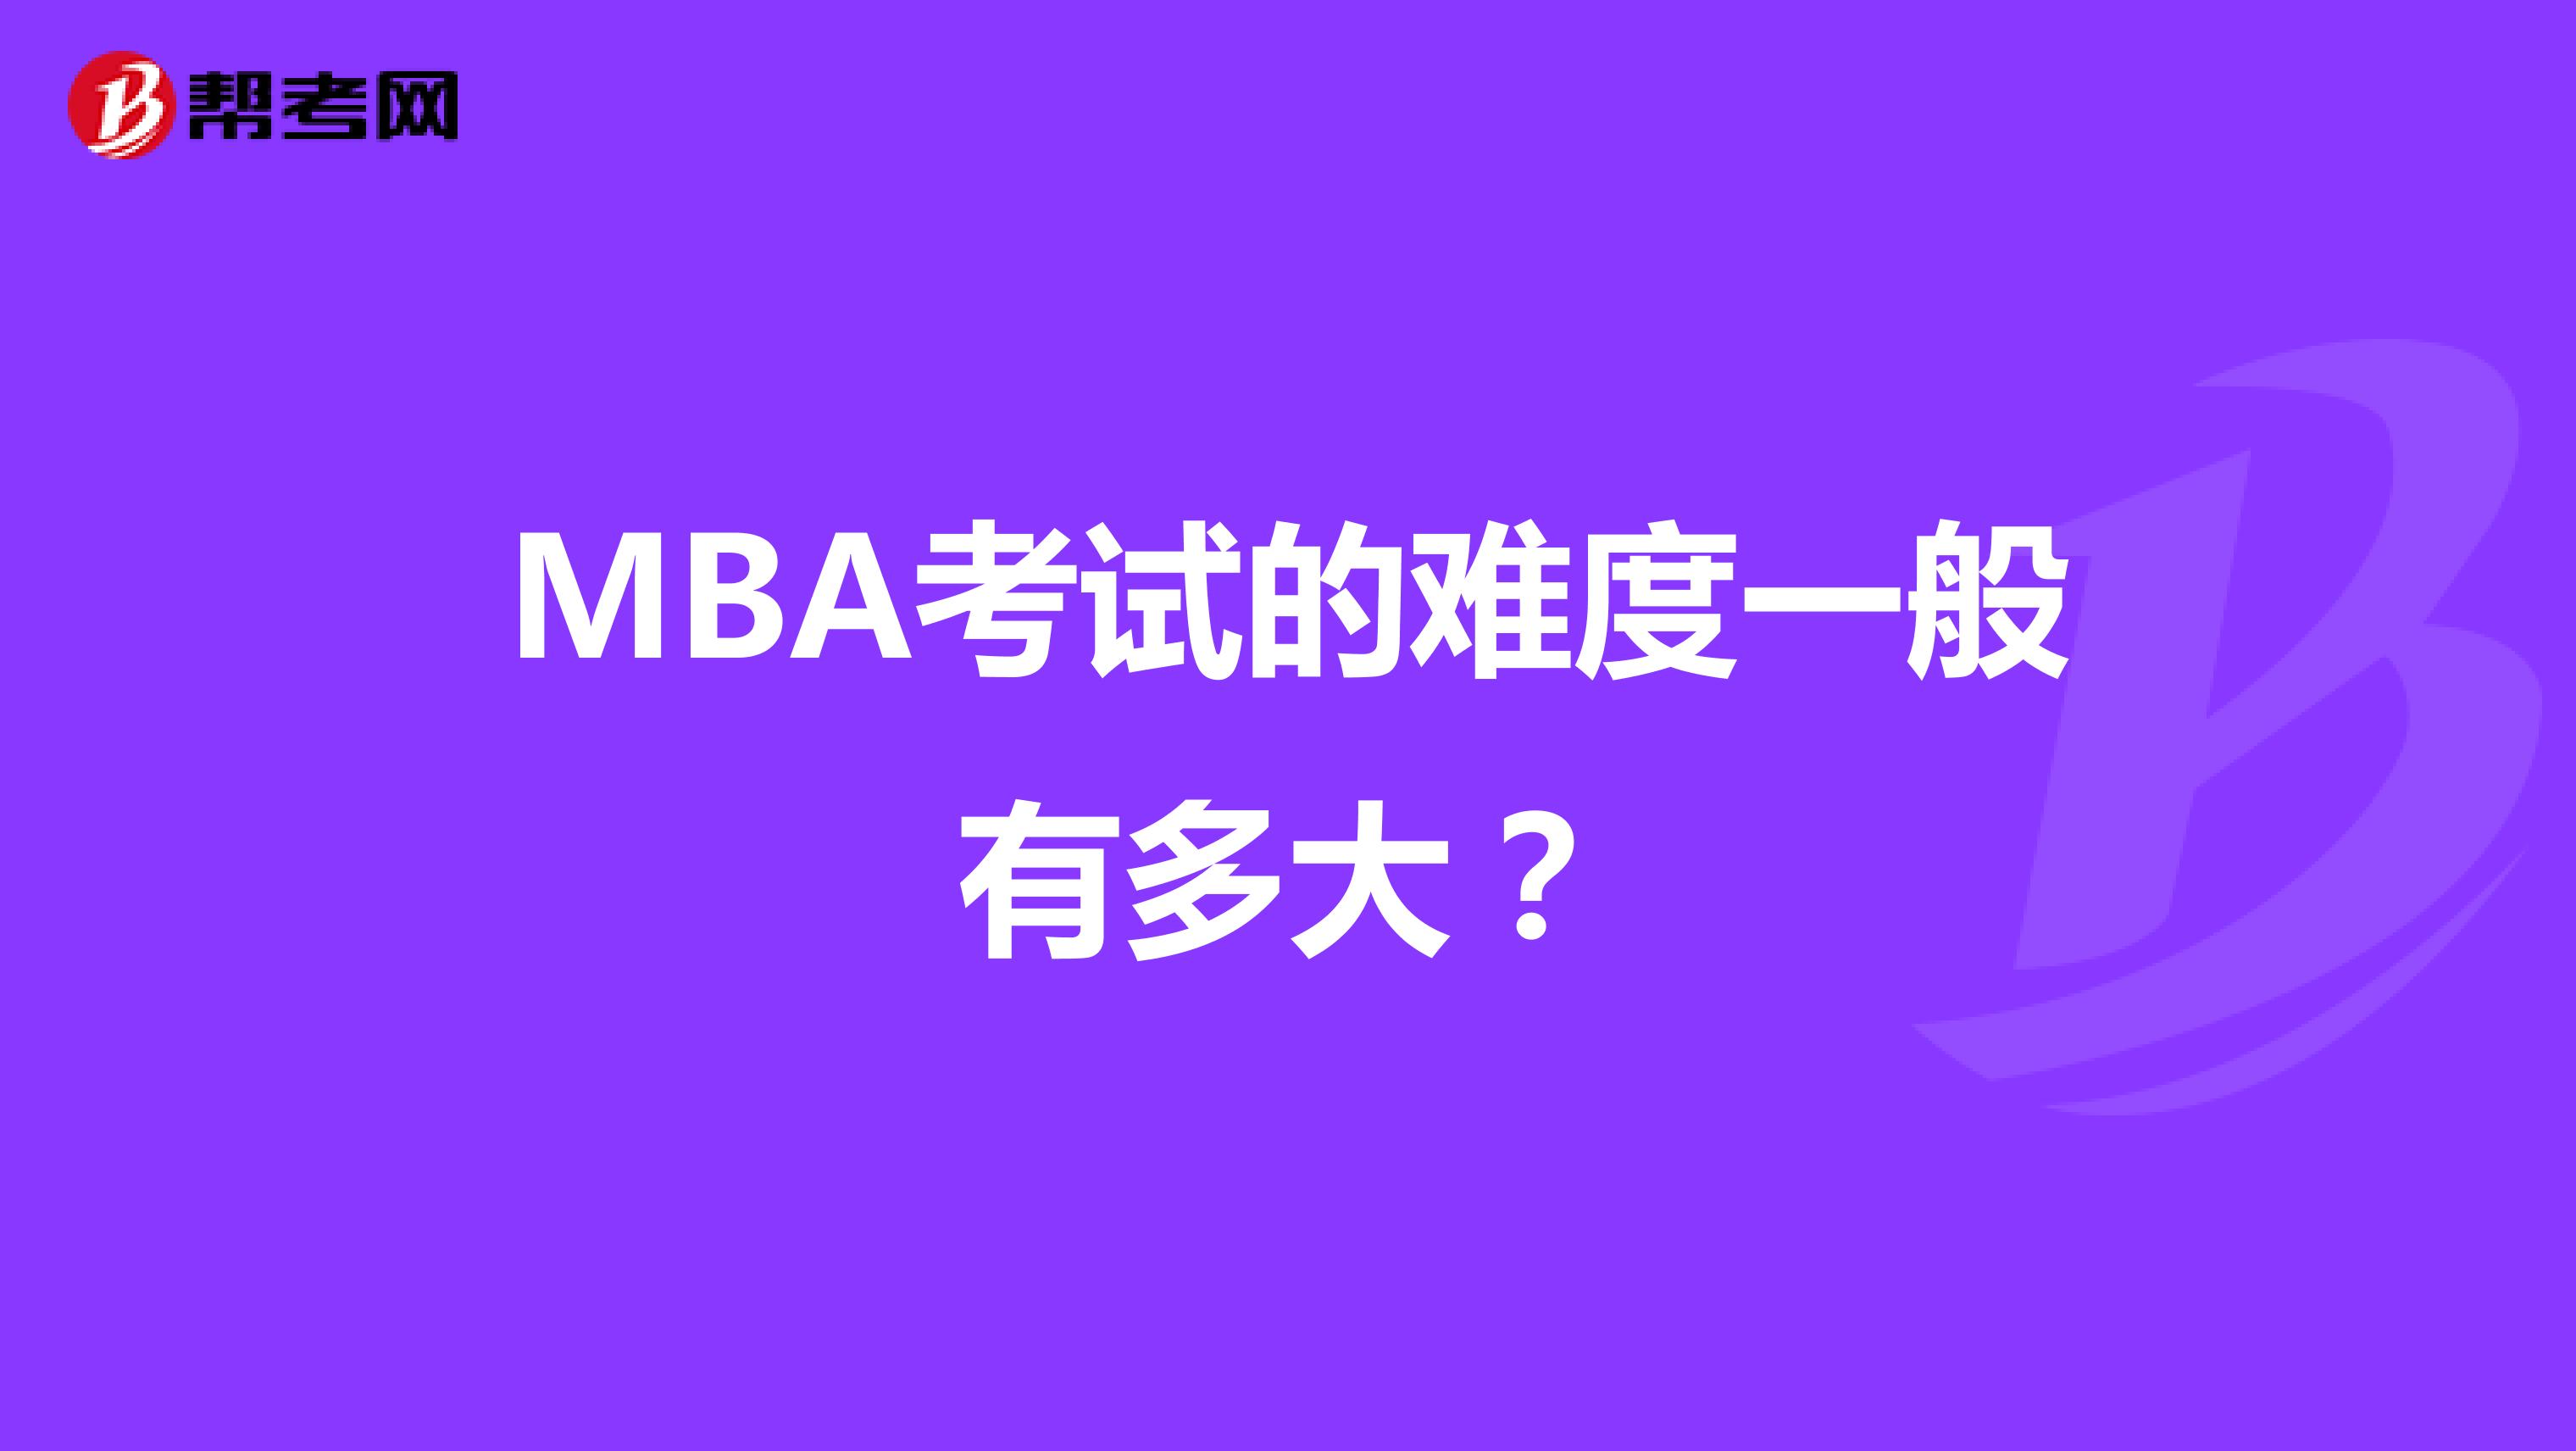 MBA考试的难度一般有多大？